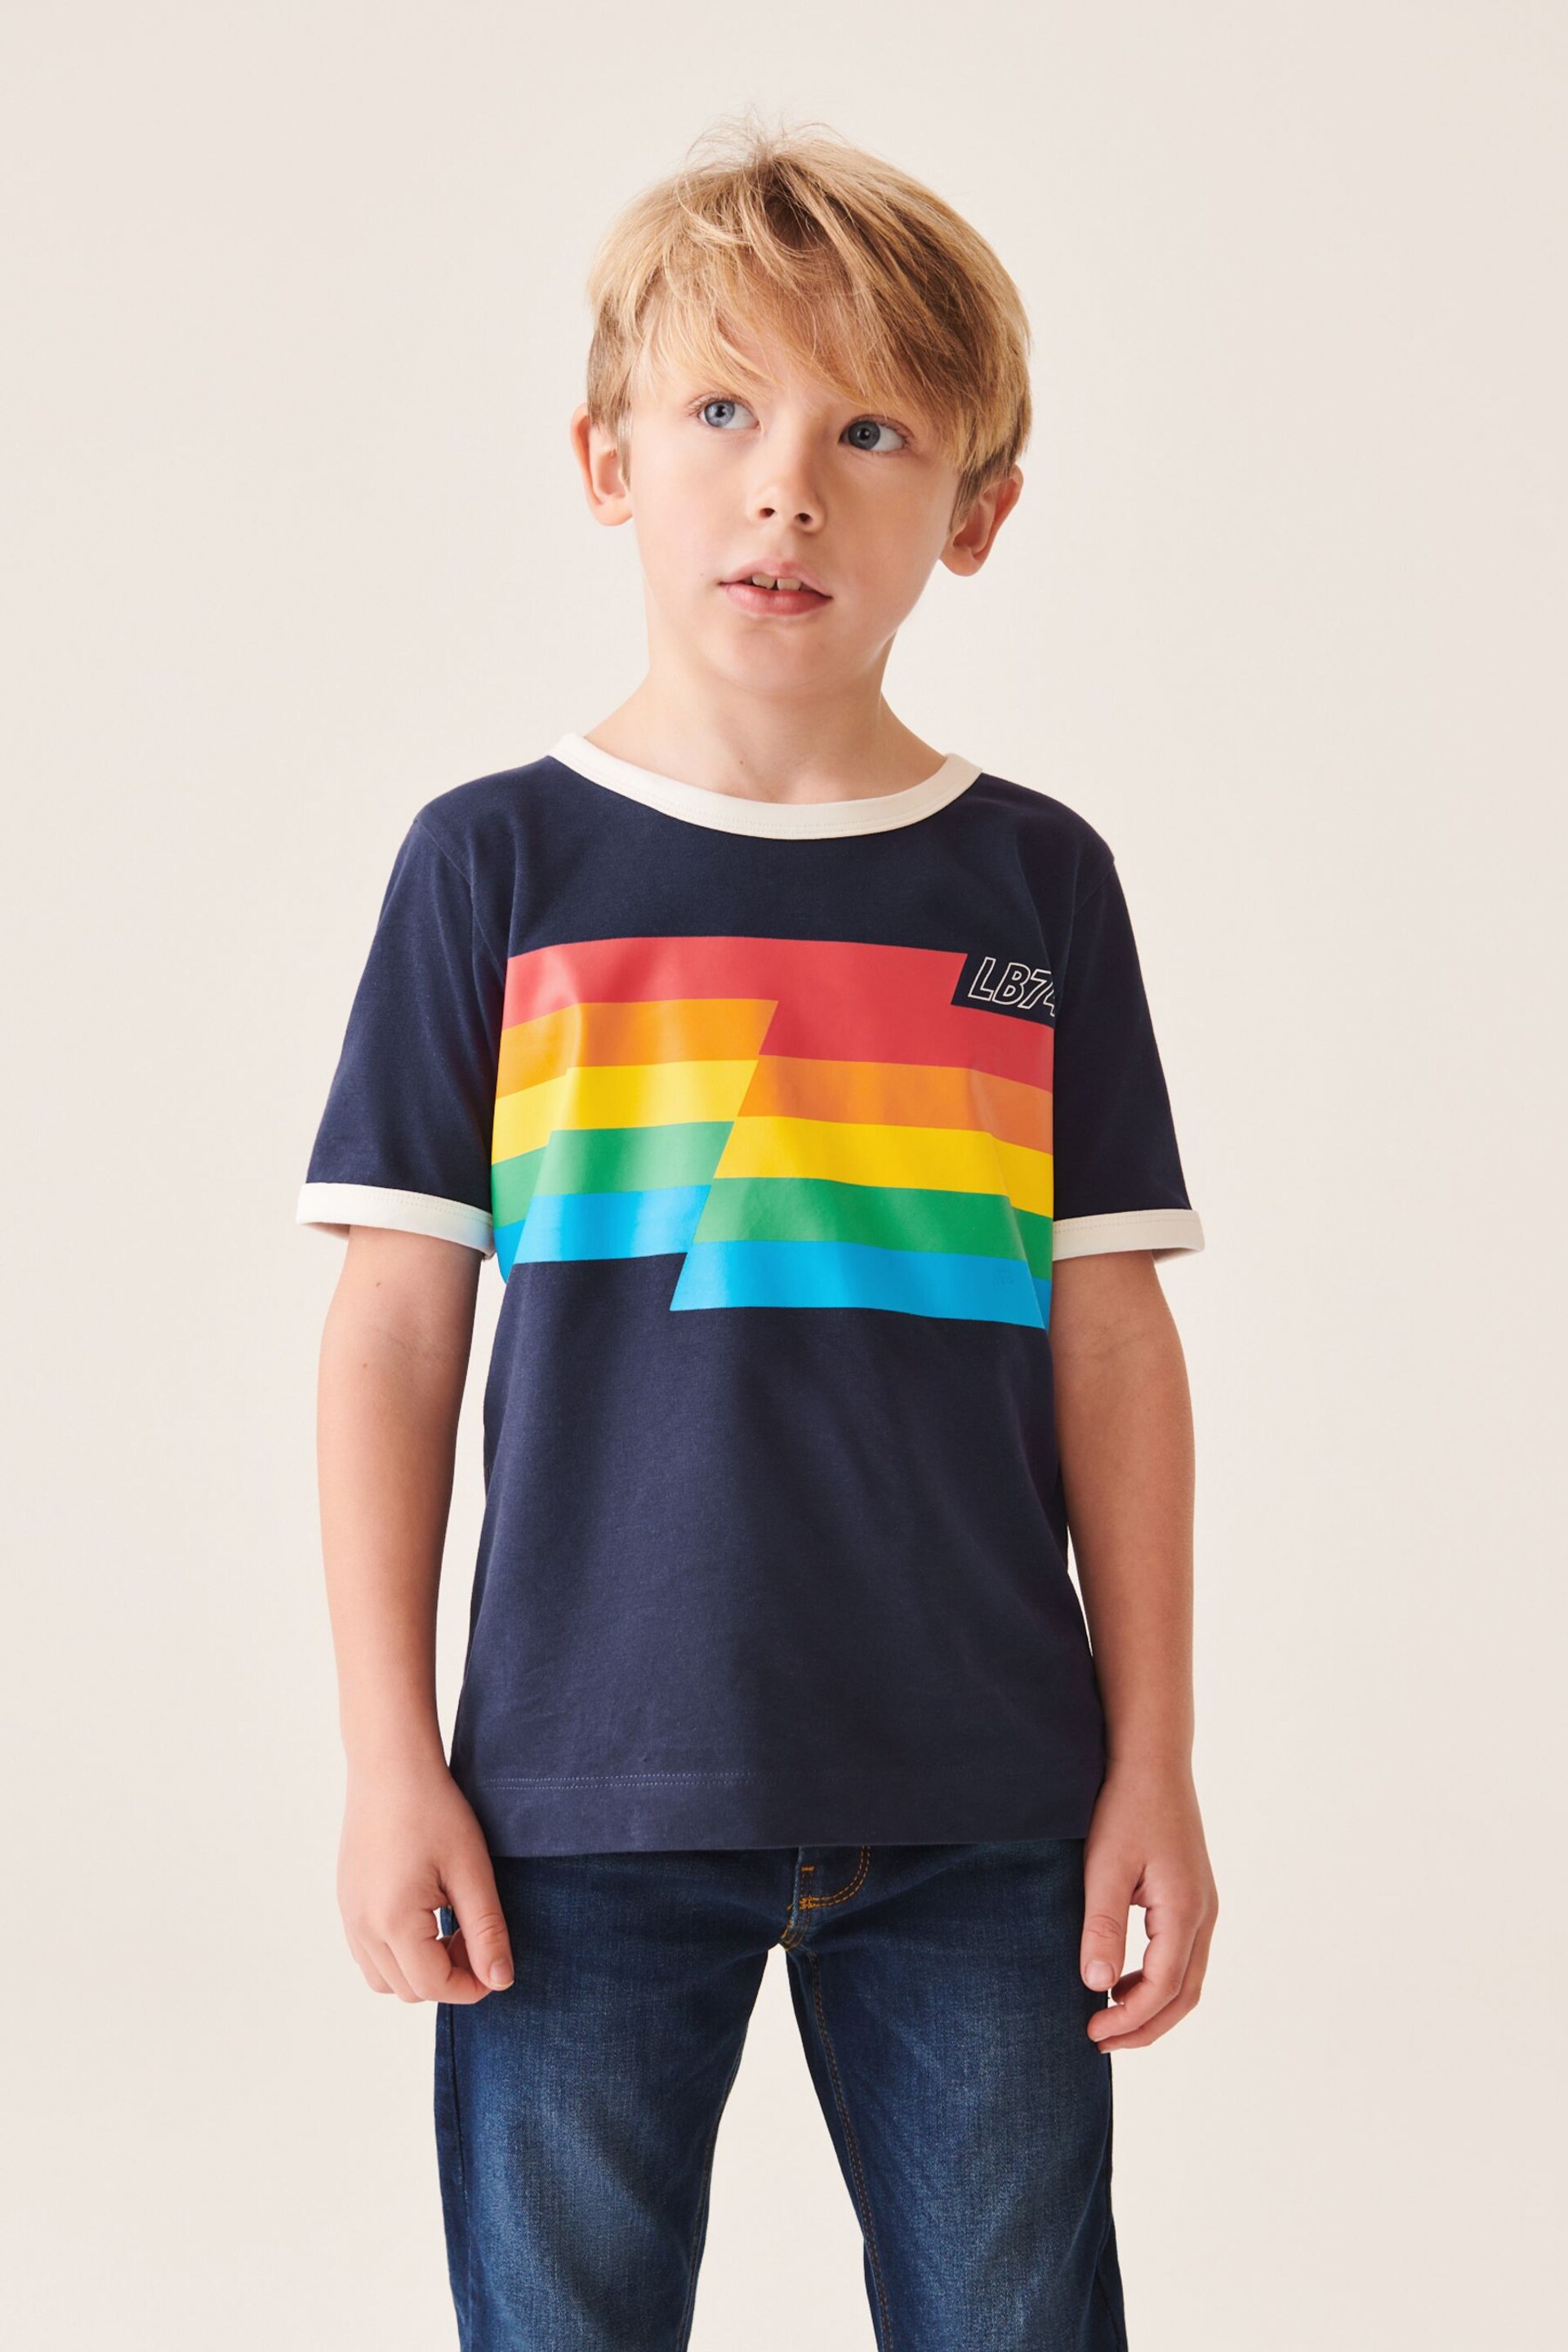 Little Bird by Jools Oliver Navy/Ecru Stripe Short Sleeve Raglan Colourful T-Shirt - Image 1 of 6